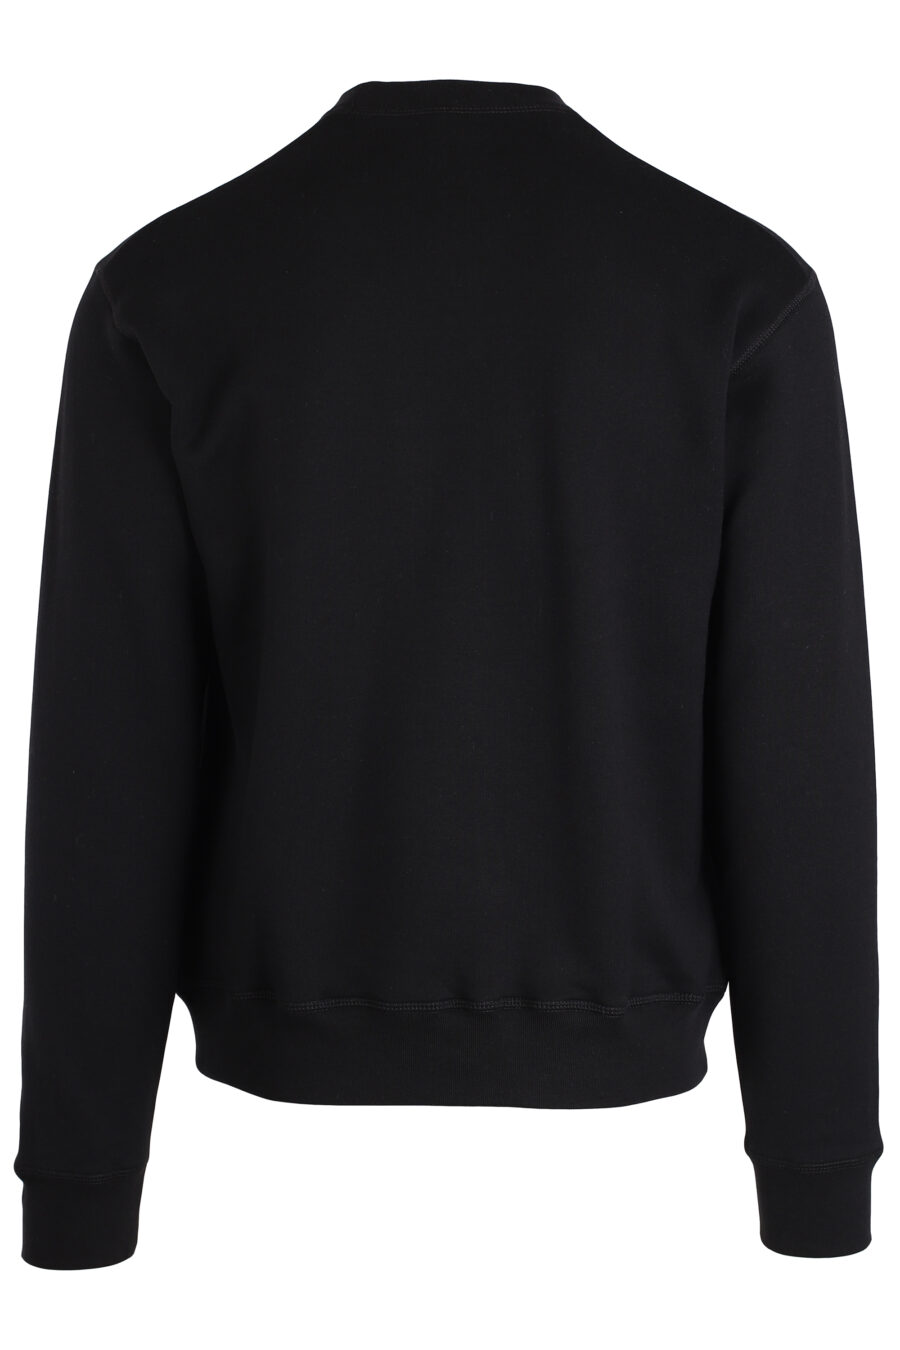 Black "back on the planet" sweatshirt - IMG 3970